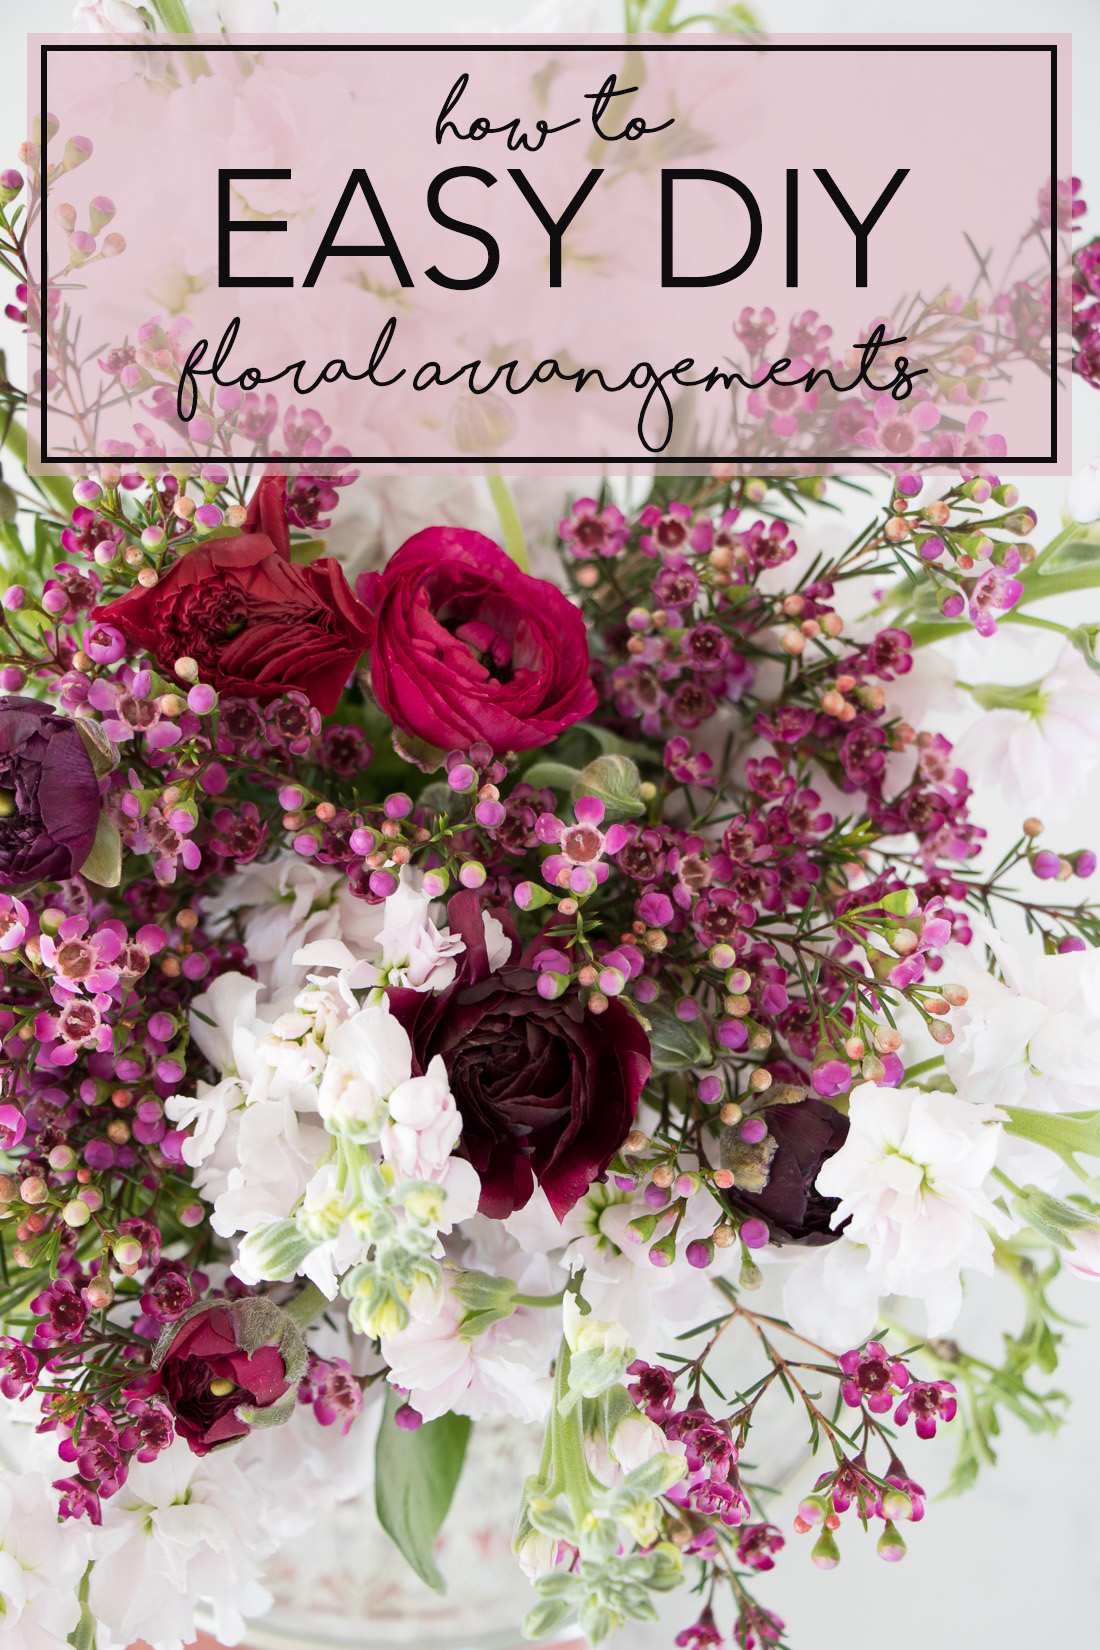 How to make easy DIY floral arrangements that last.